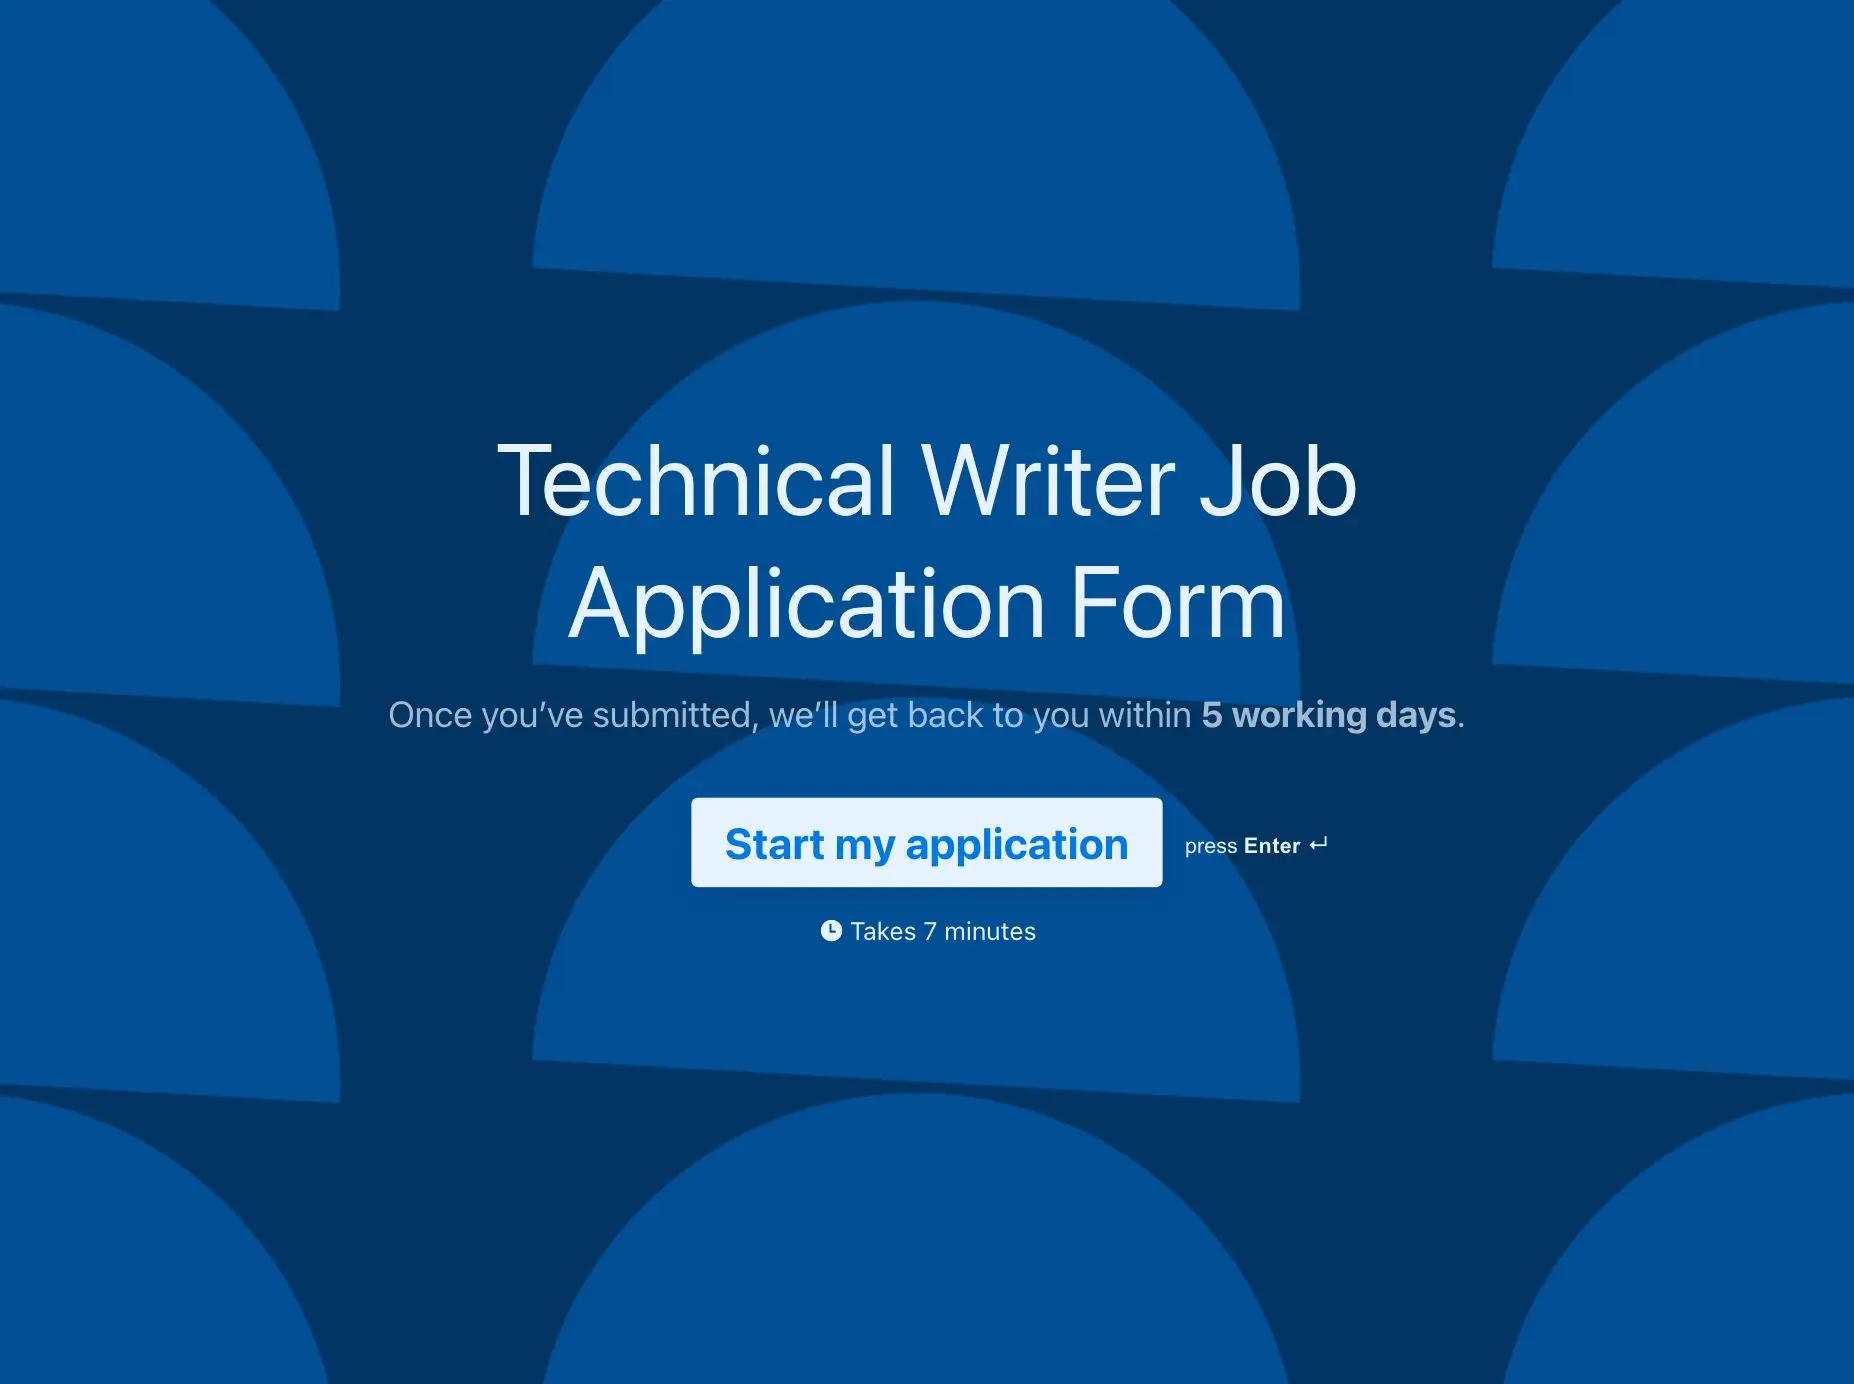 Technical Writer Job Application Form Template Hero